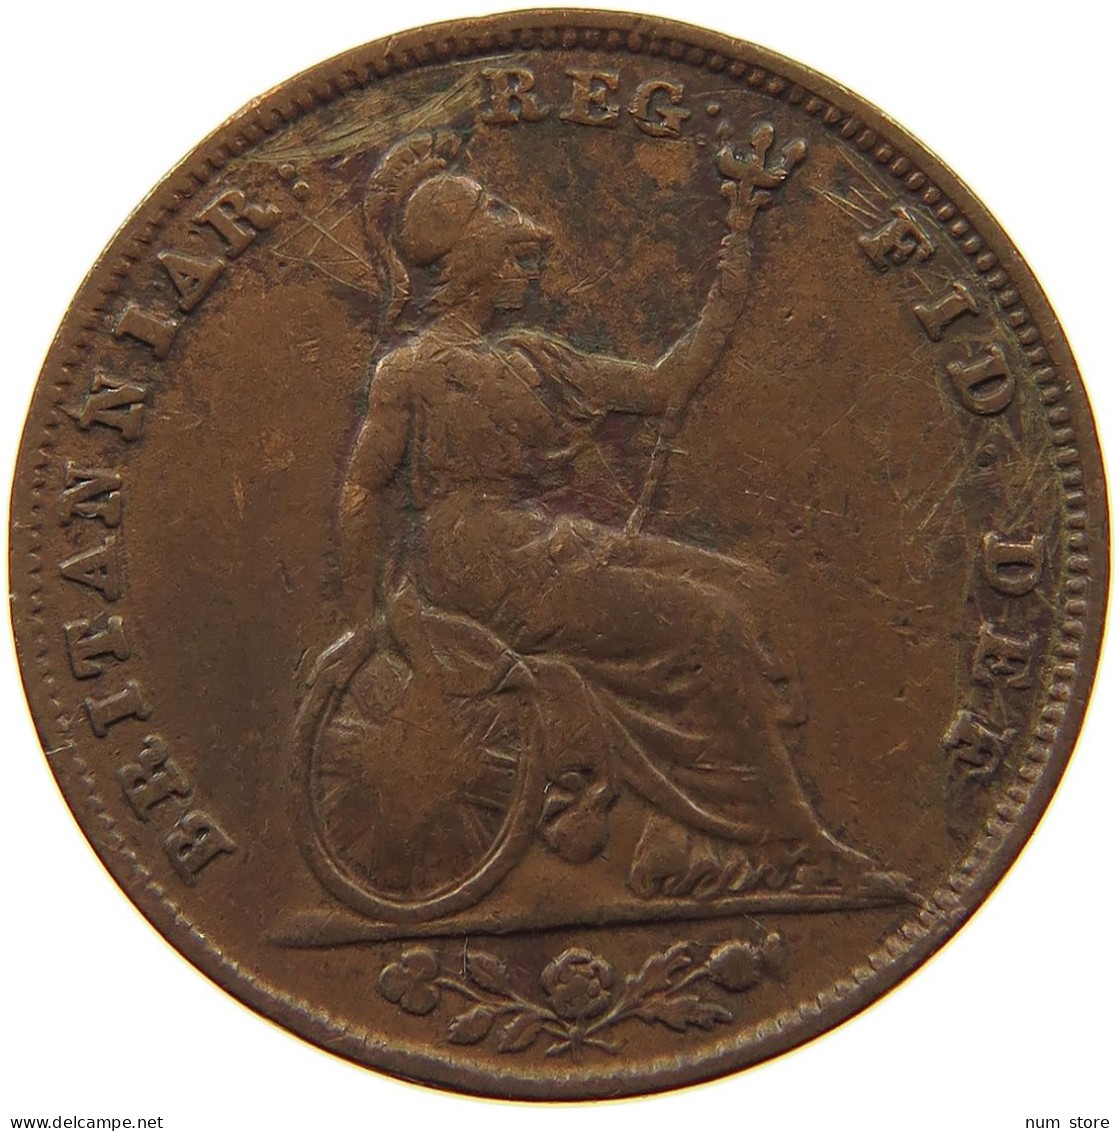 GREAT BRITAIN FARTHING 1840 Victoria 1837-1901 #s050 0639 - B. 1 Farthing